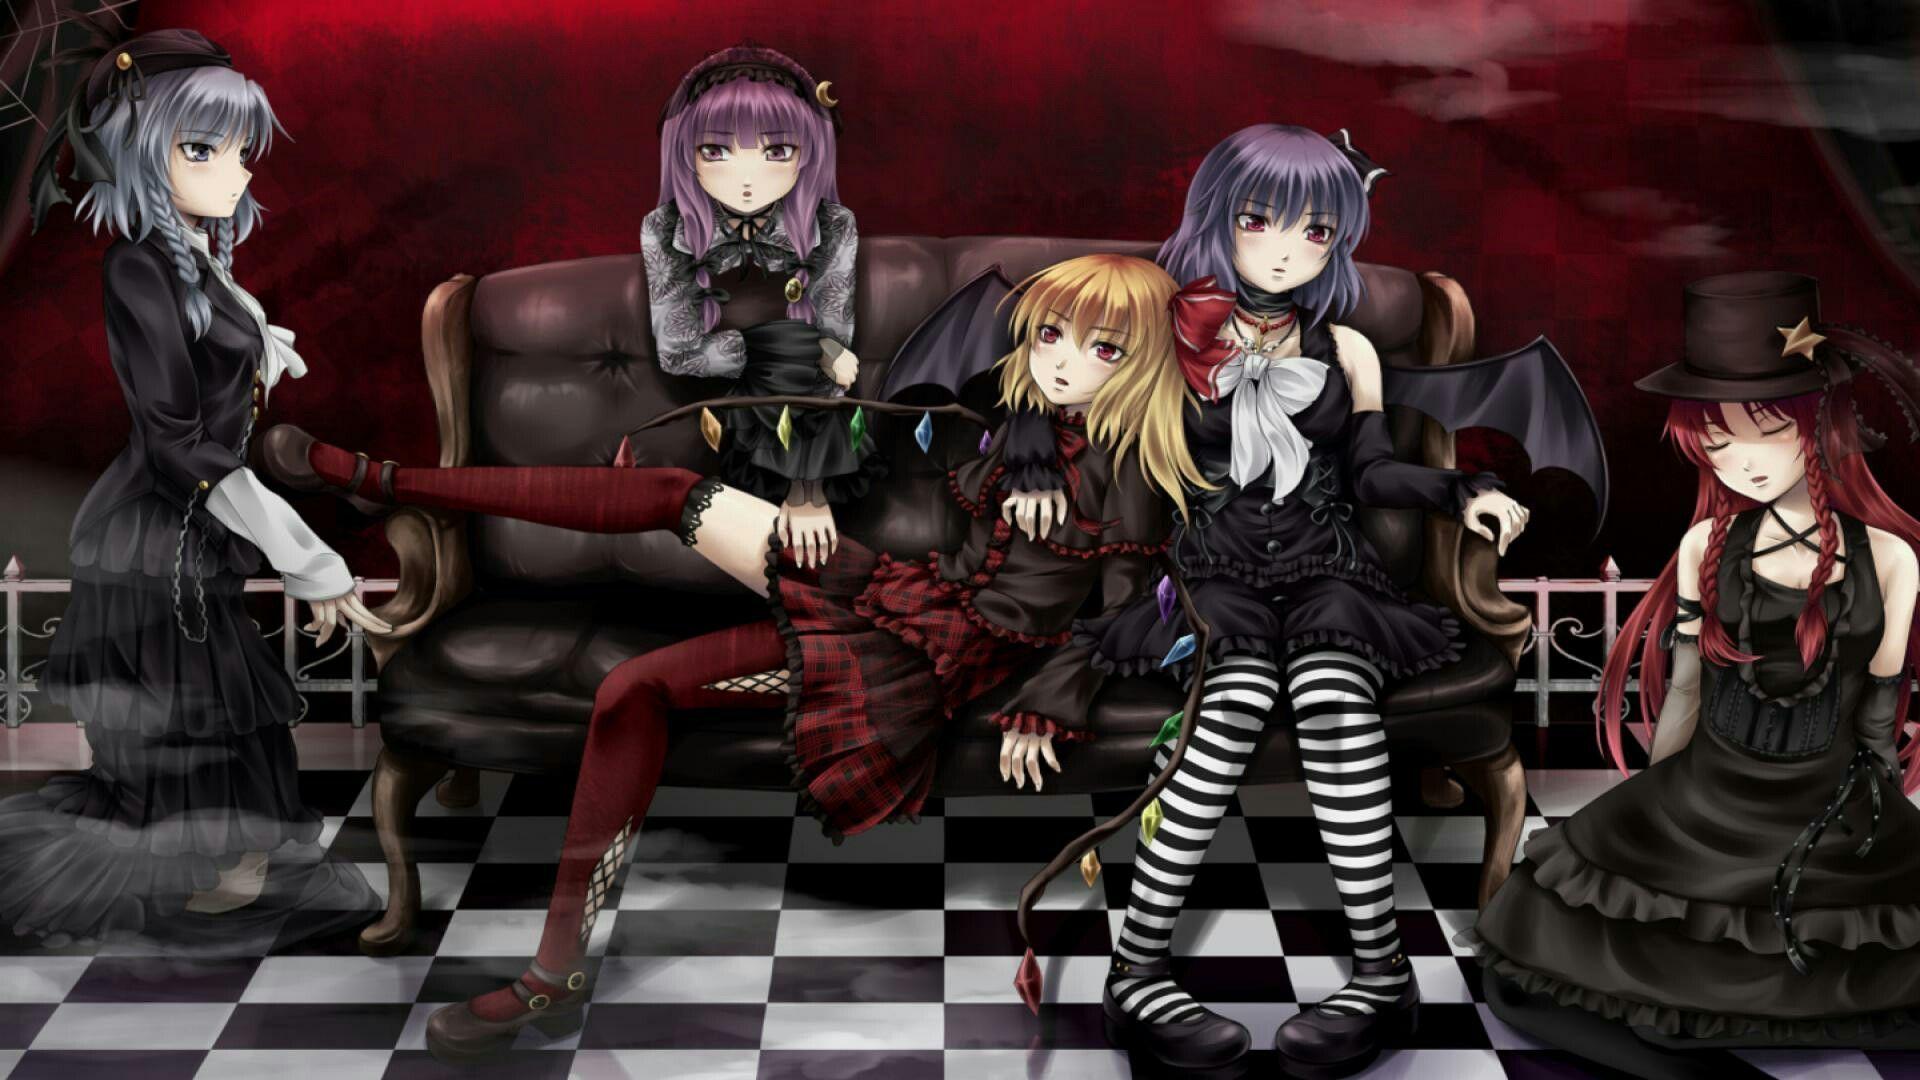 Anime gothic girls. Gothic inspired anime. Gothic